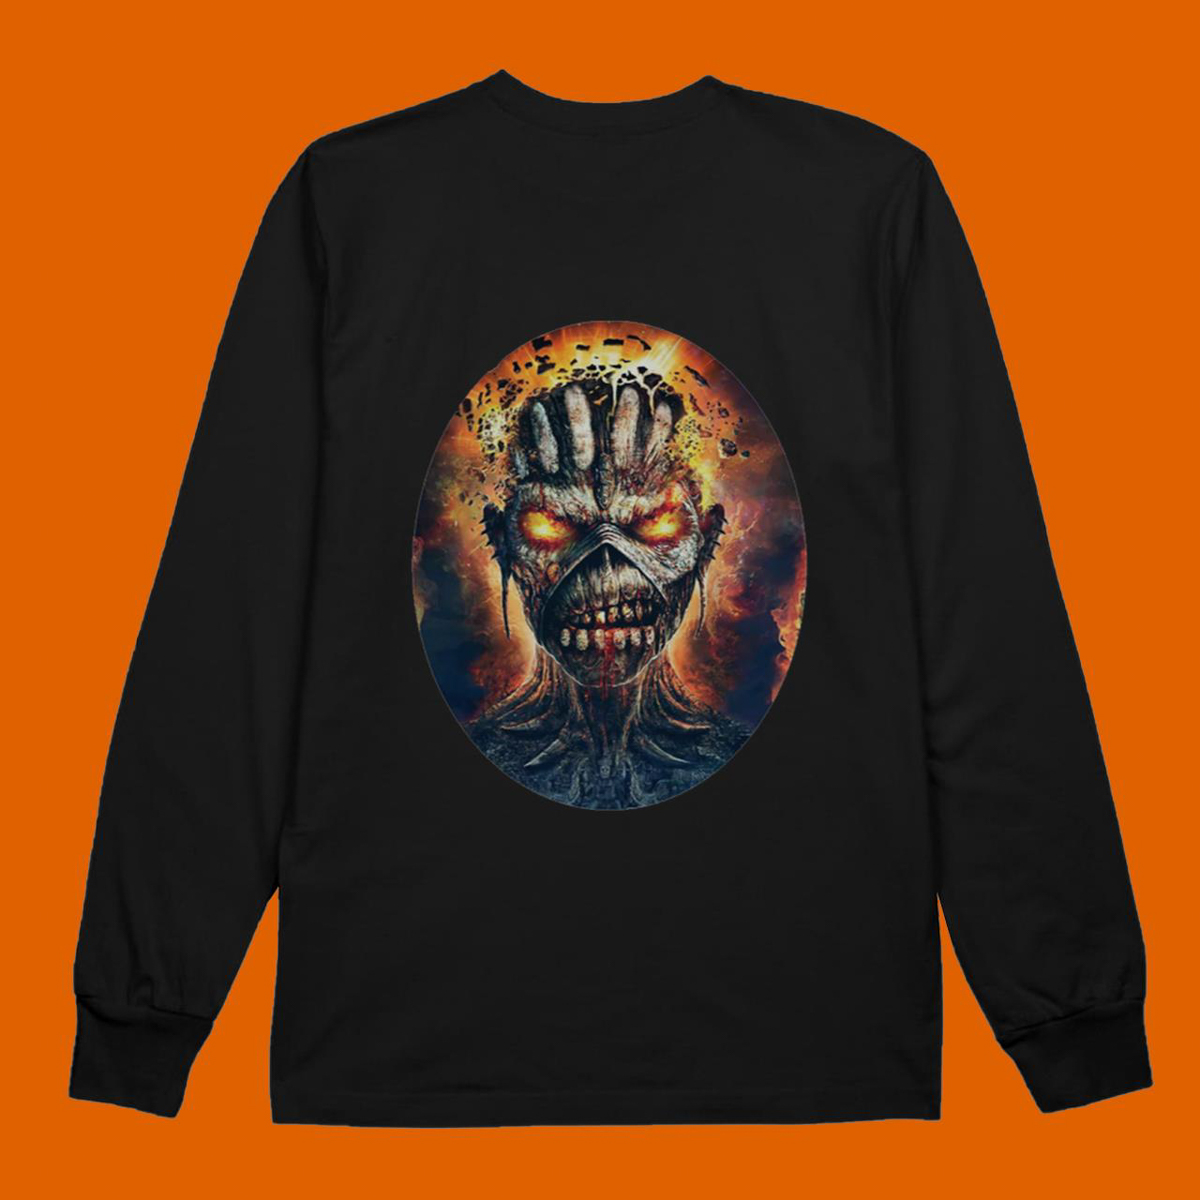 Horror Iron Maiden Skull Shirt